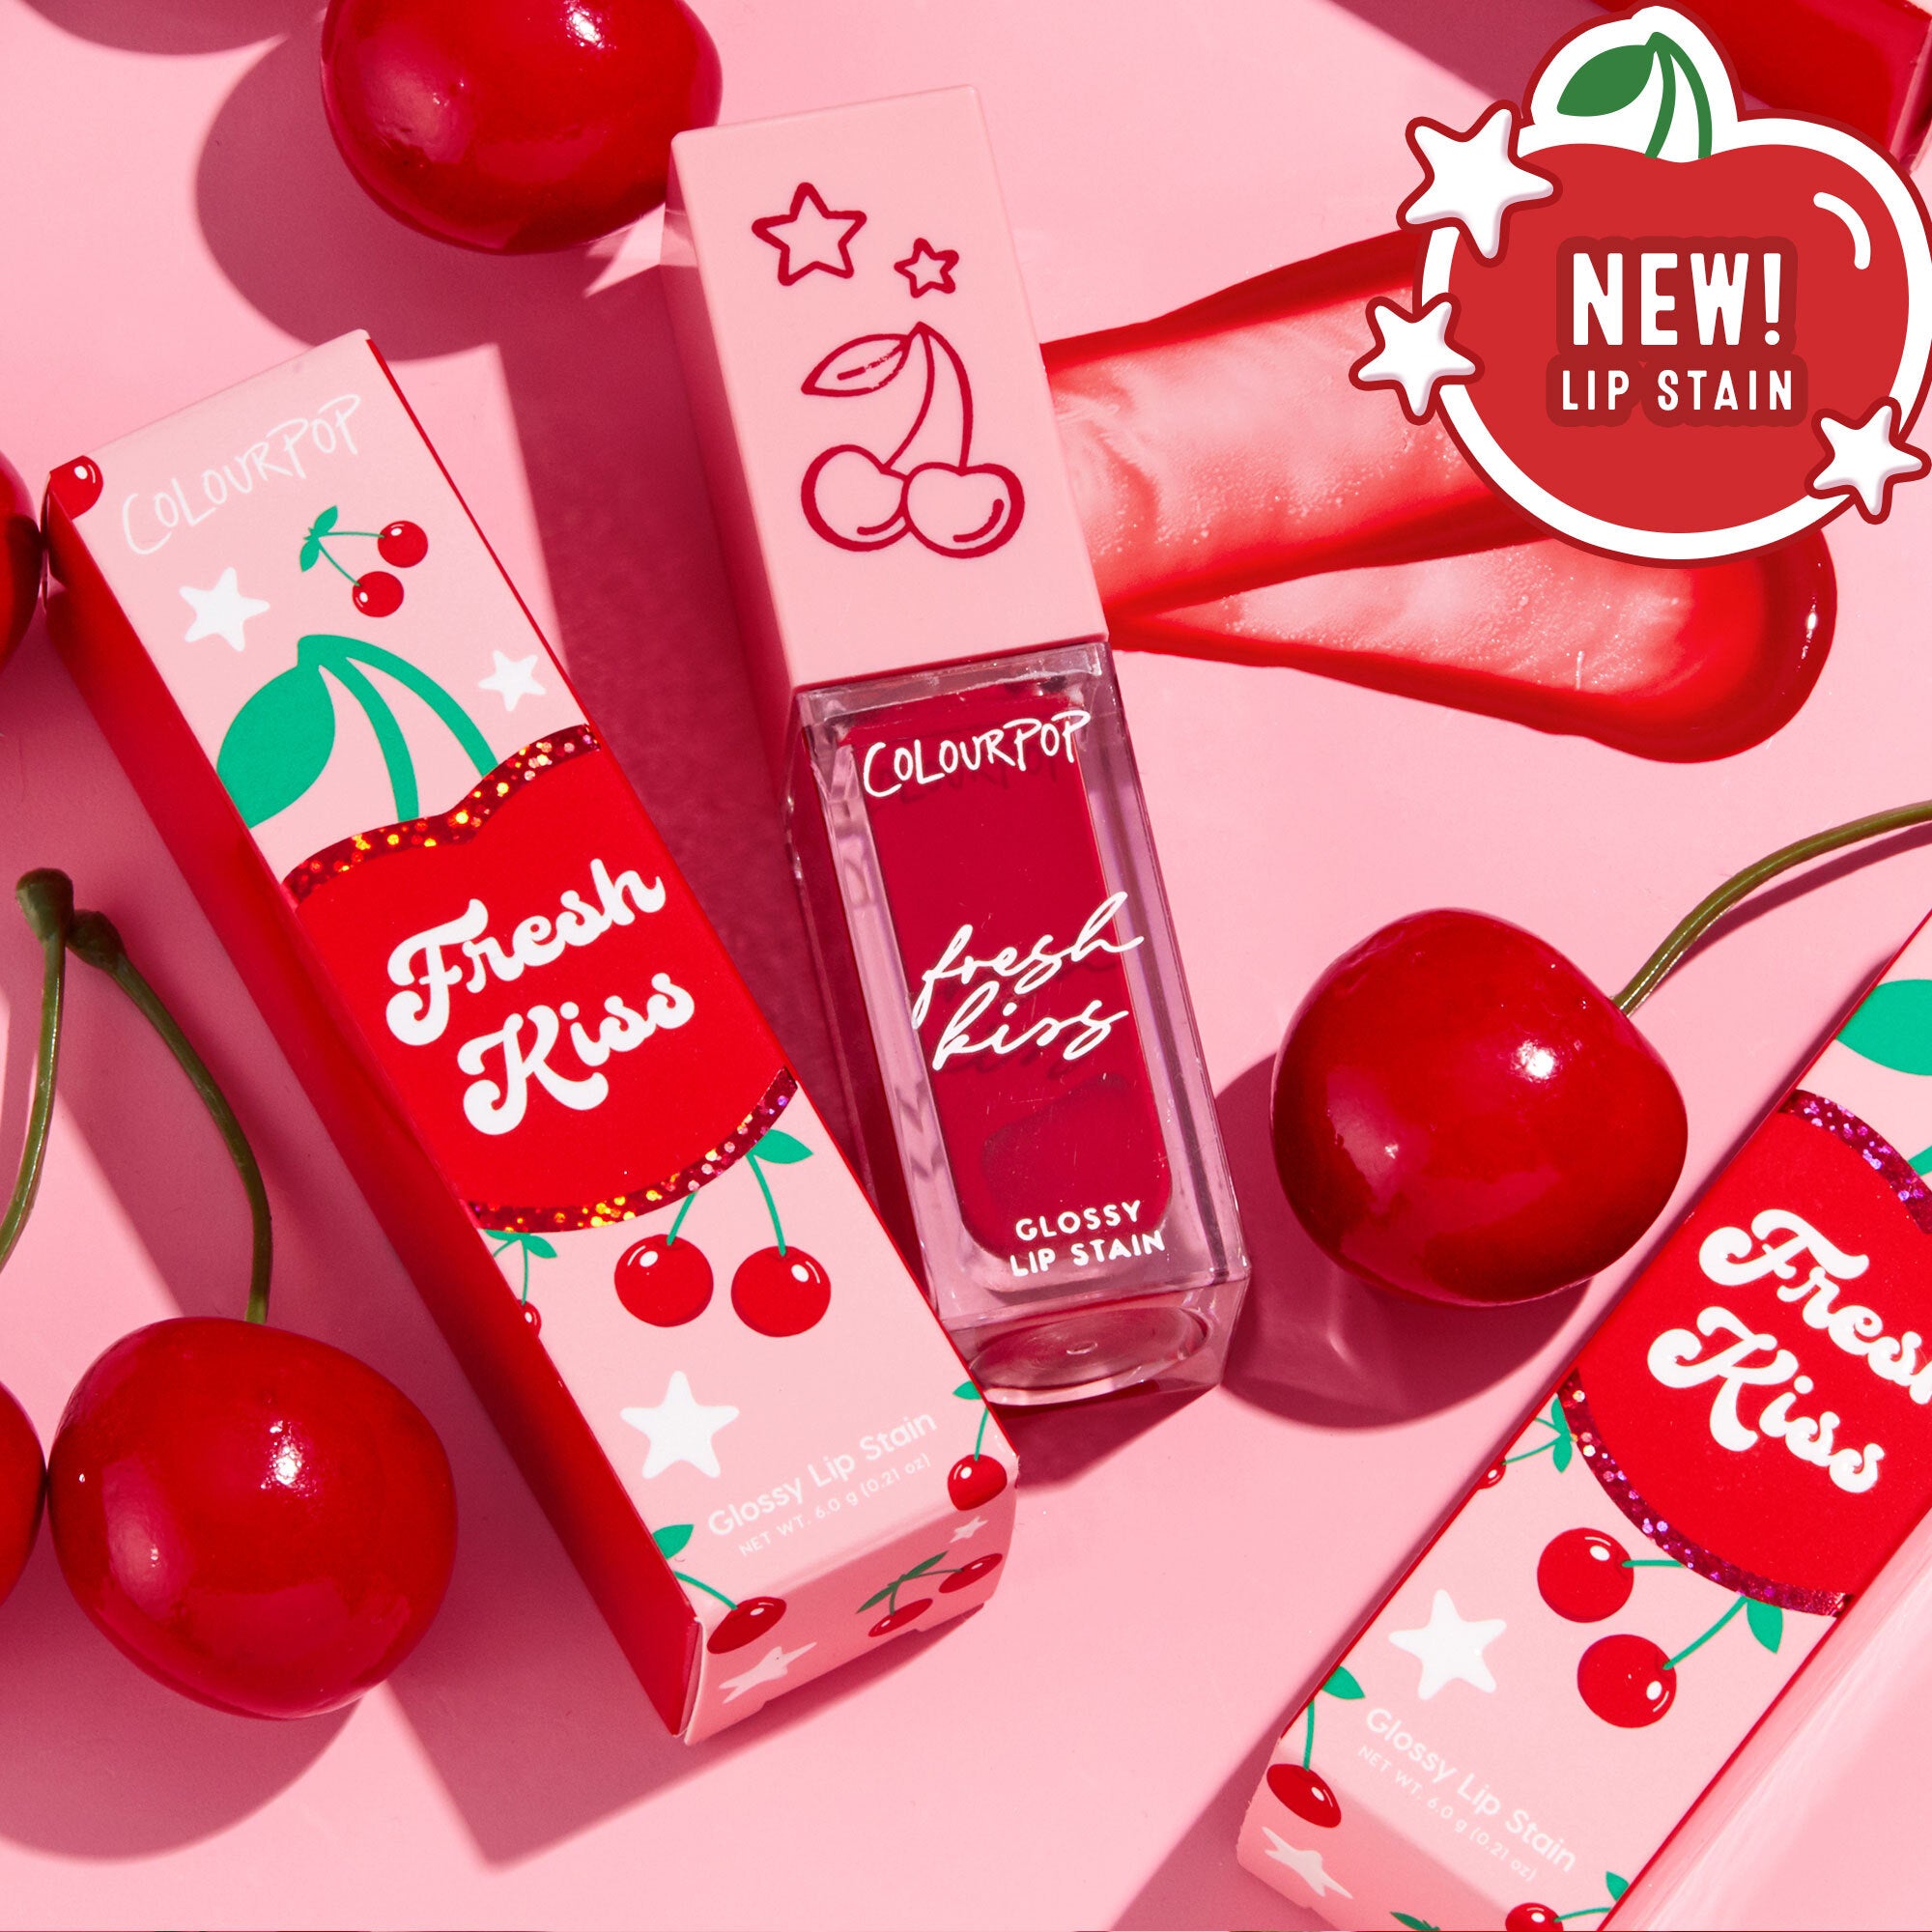 ColourPop Fresh Kiss Glossy Lip Stain in Double Cherry, a true cherry hybrid lip stain.